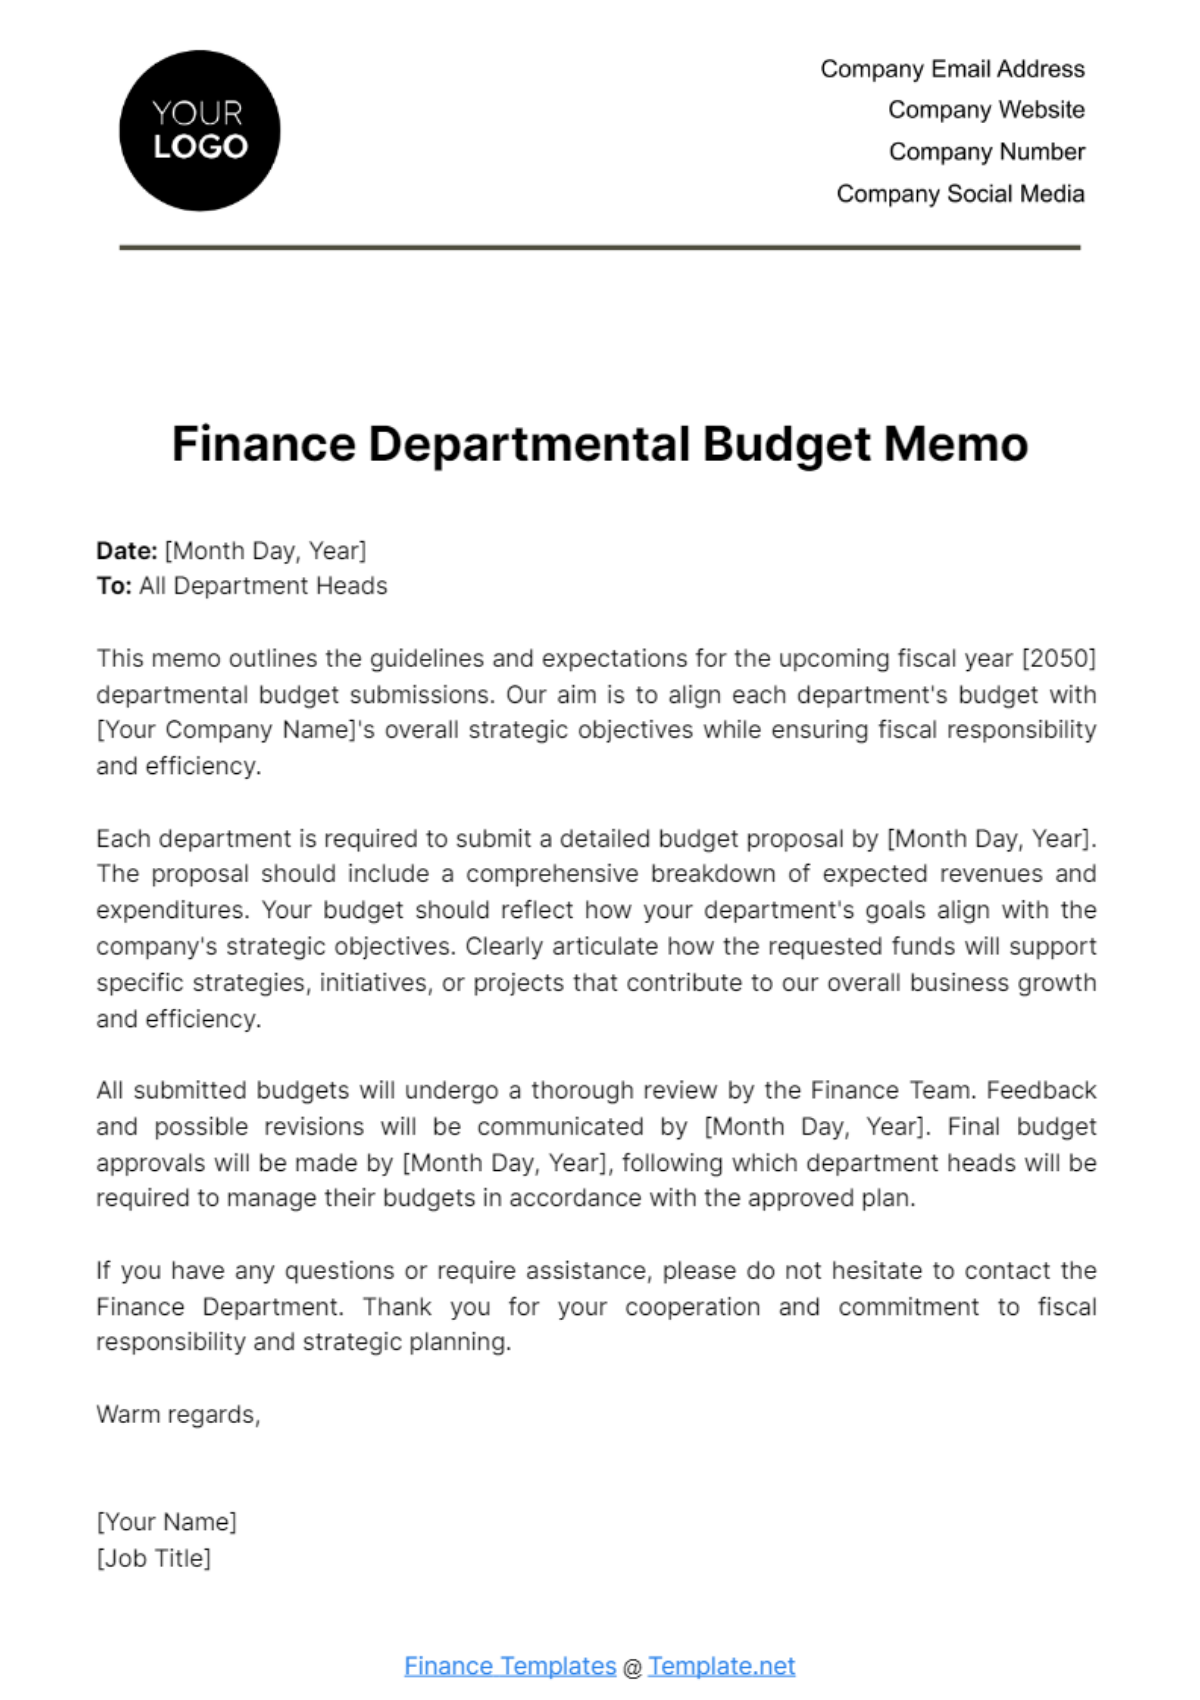 Finance Departmental Budget Memo Template